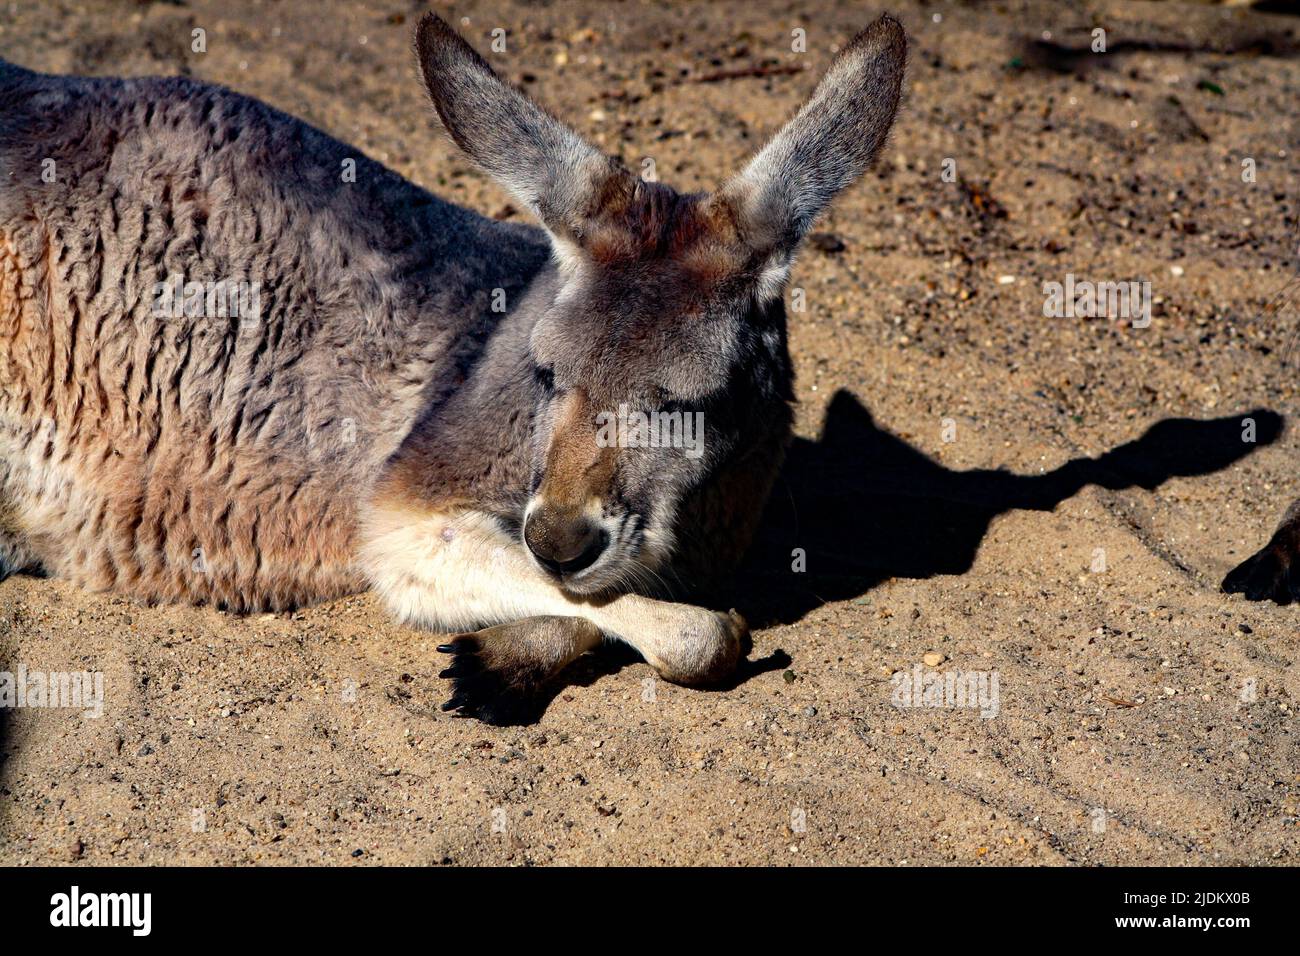 Kangaroo relaxing in the sunshine Stock Photo